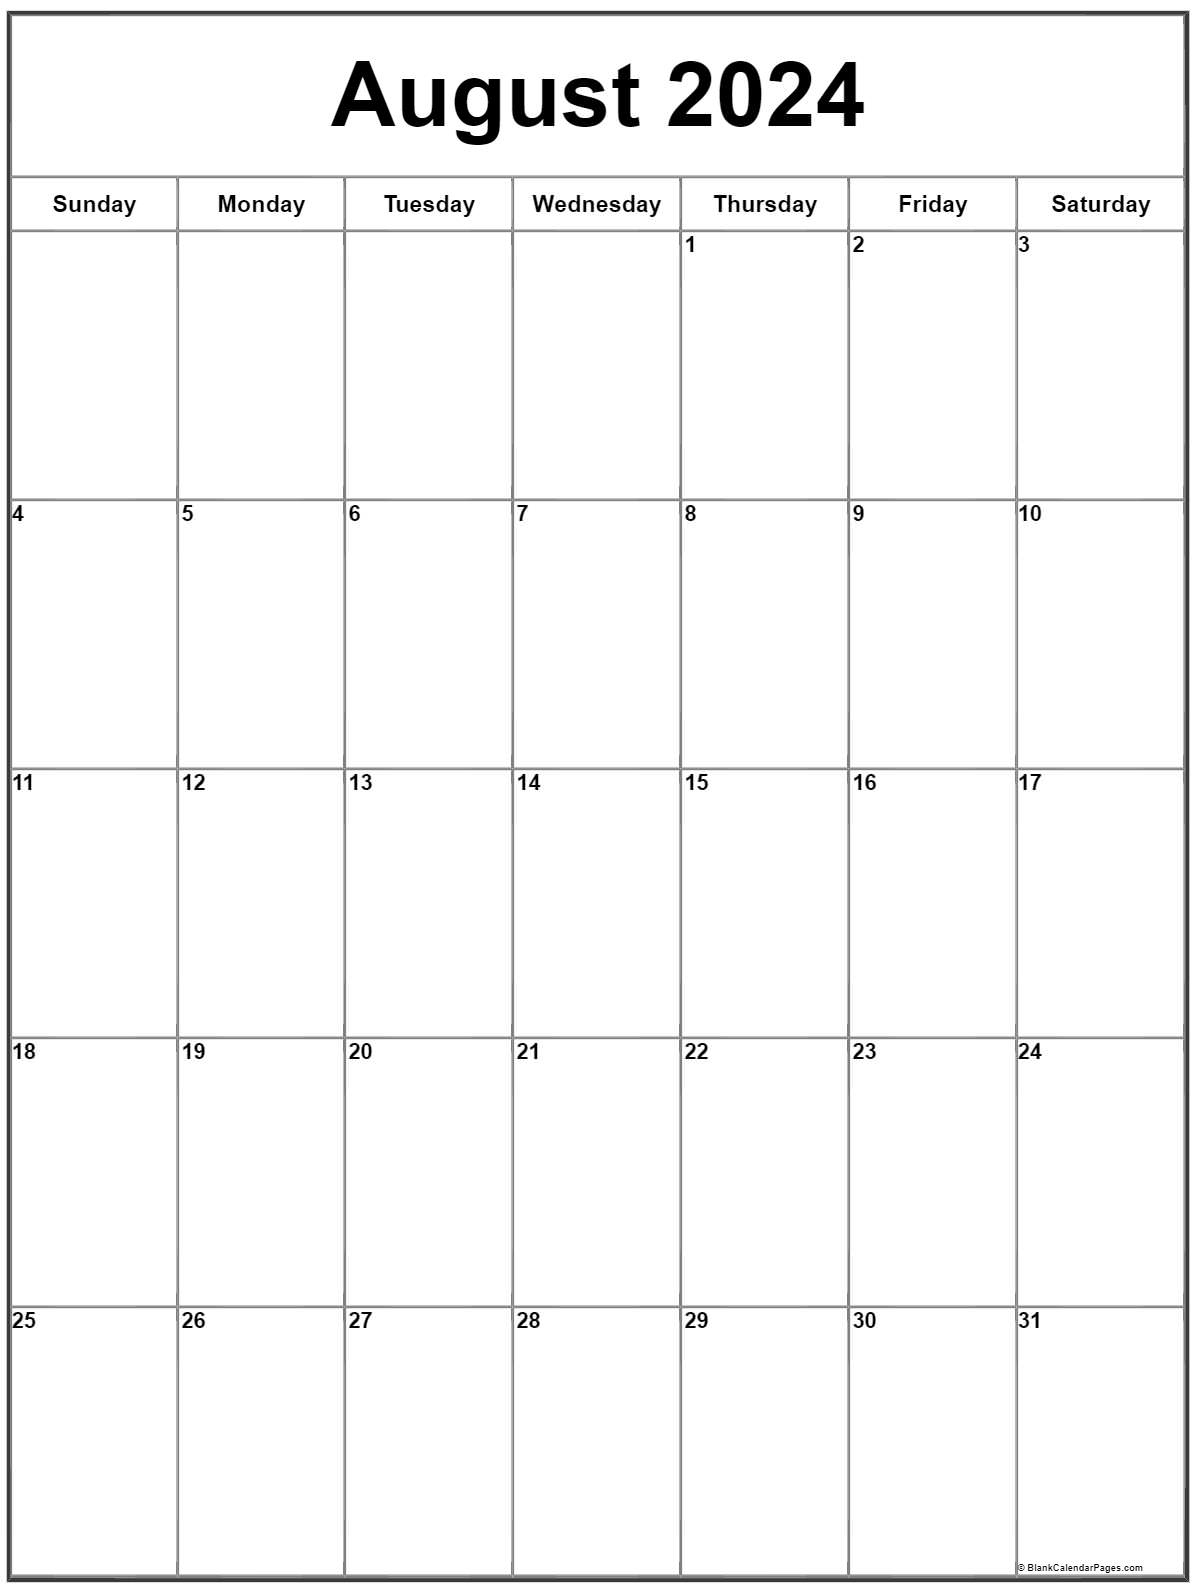 August 2024 Calendar Pdf Portriat Dyane Grethel - Free Printable 2024 Calendar Without Downloading